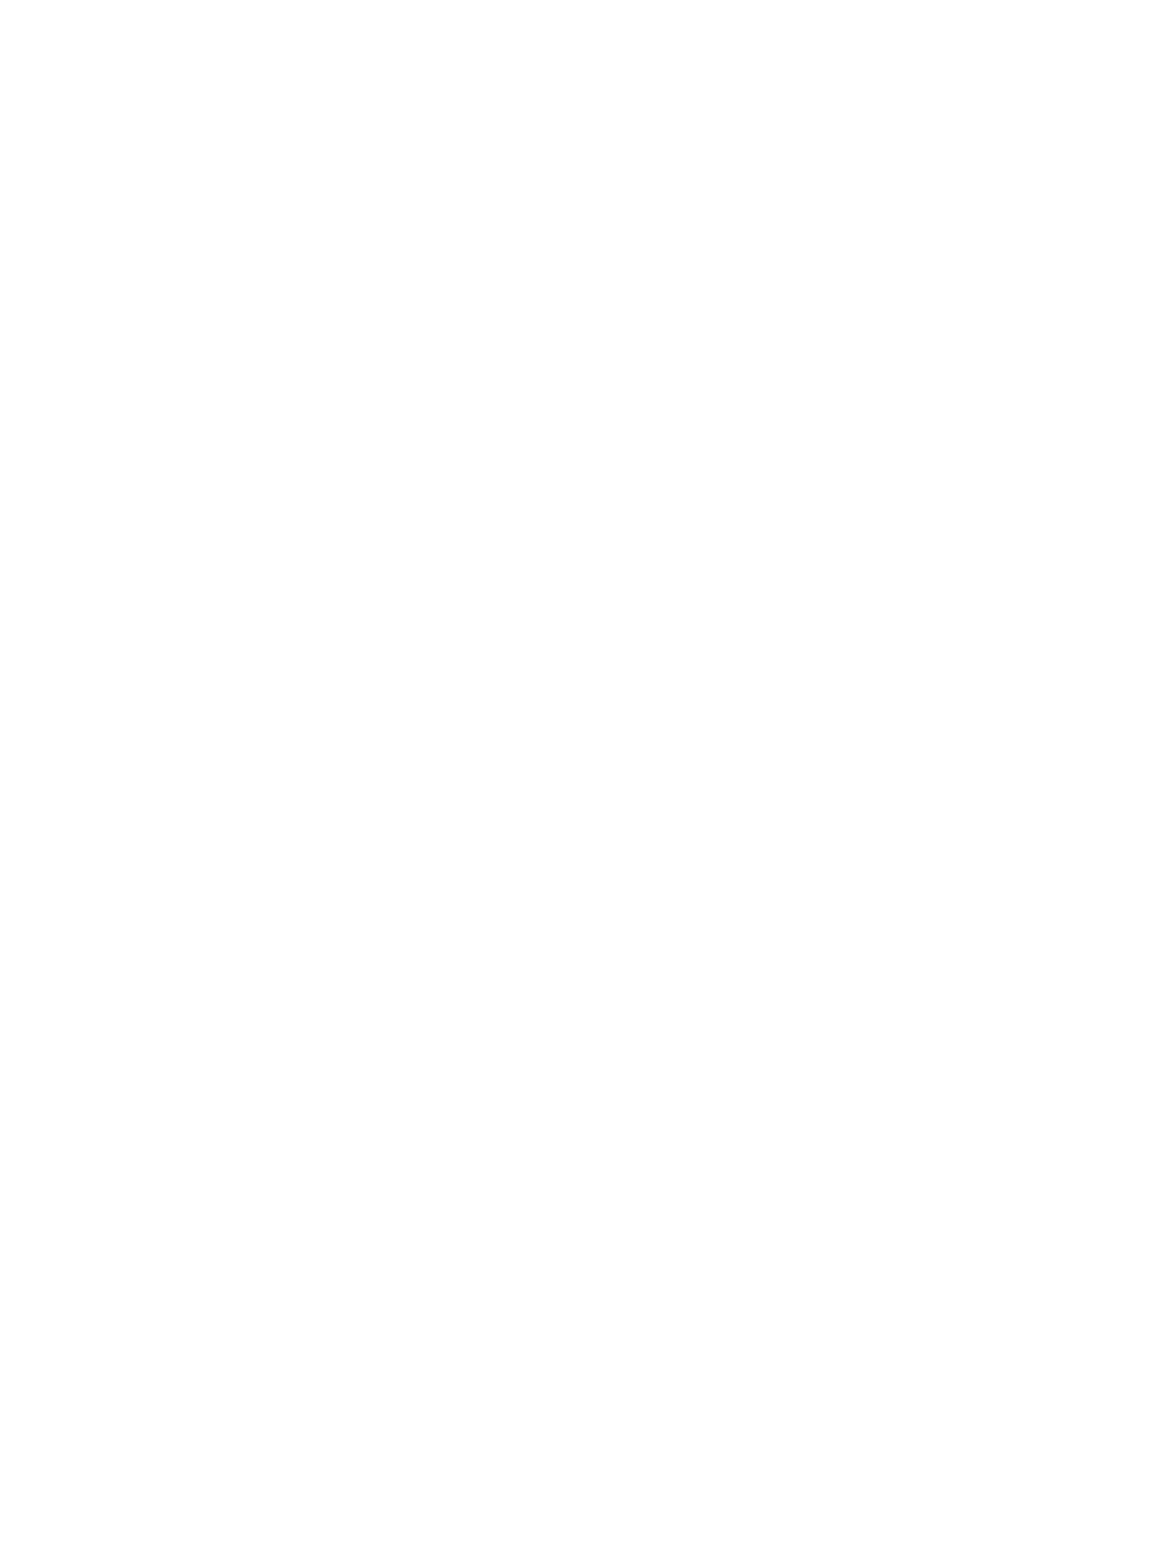 KLCC Property Holdings logo for dark backgrounds (transparent PNG)